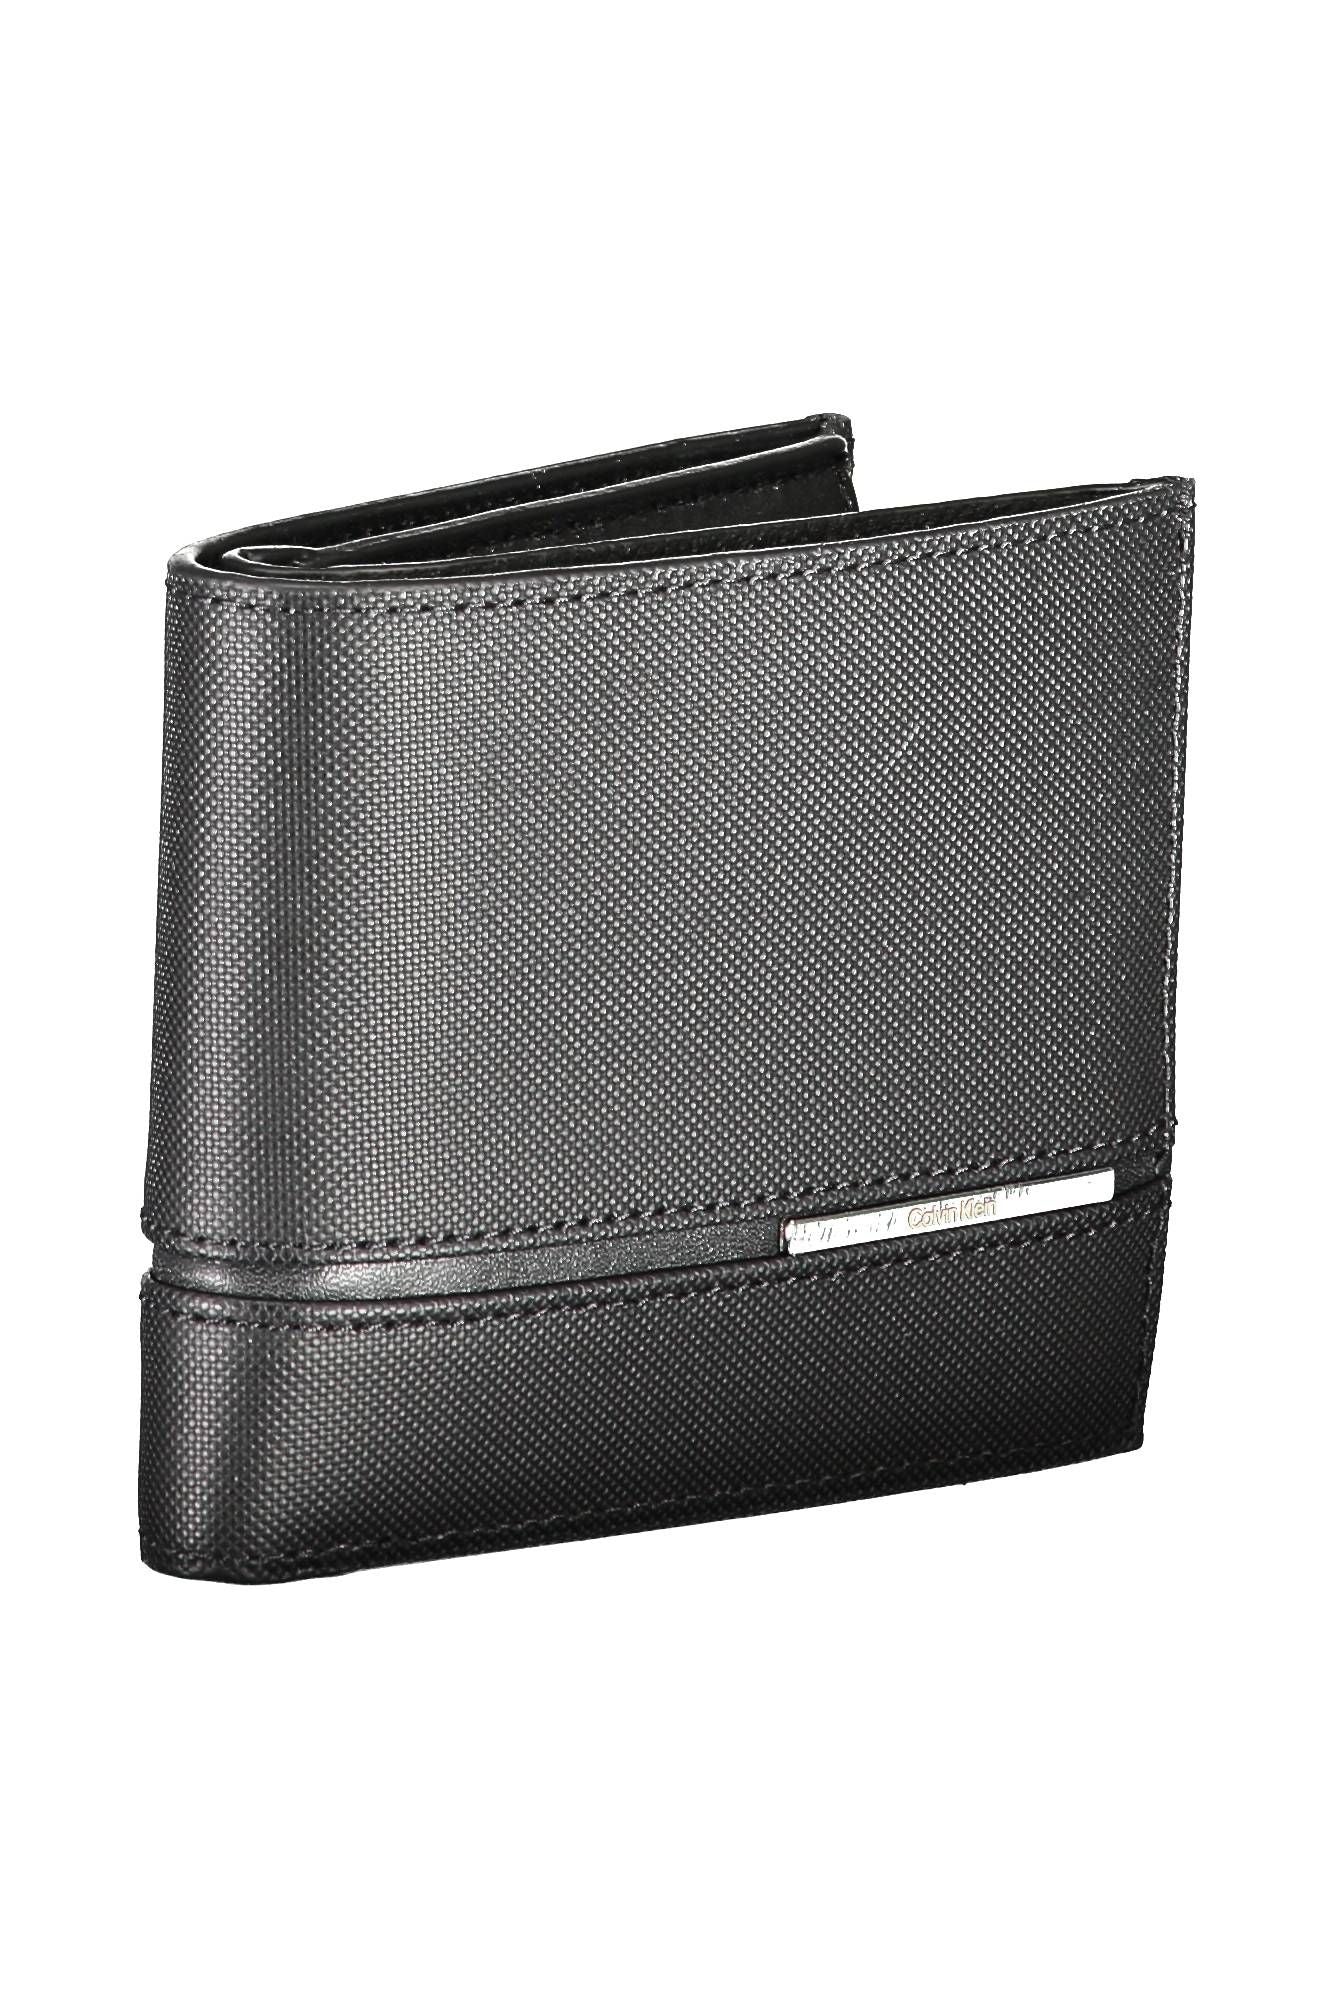 Calvin Klein Elegant Black Leather RFID Wallet